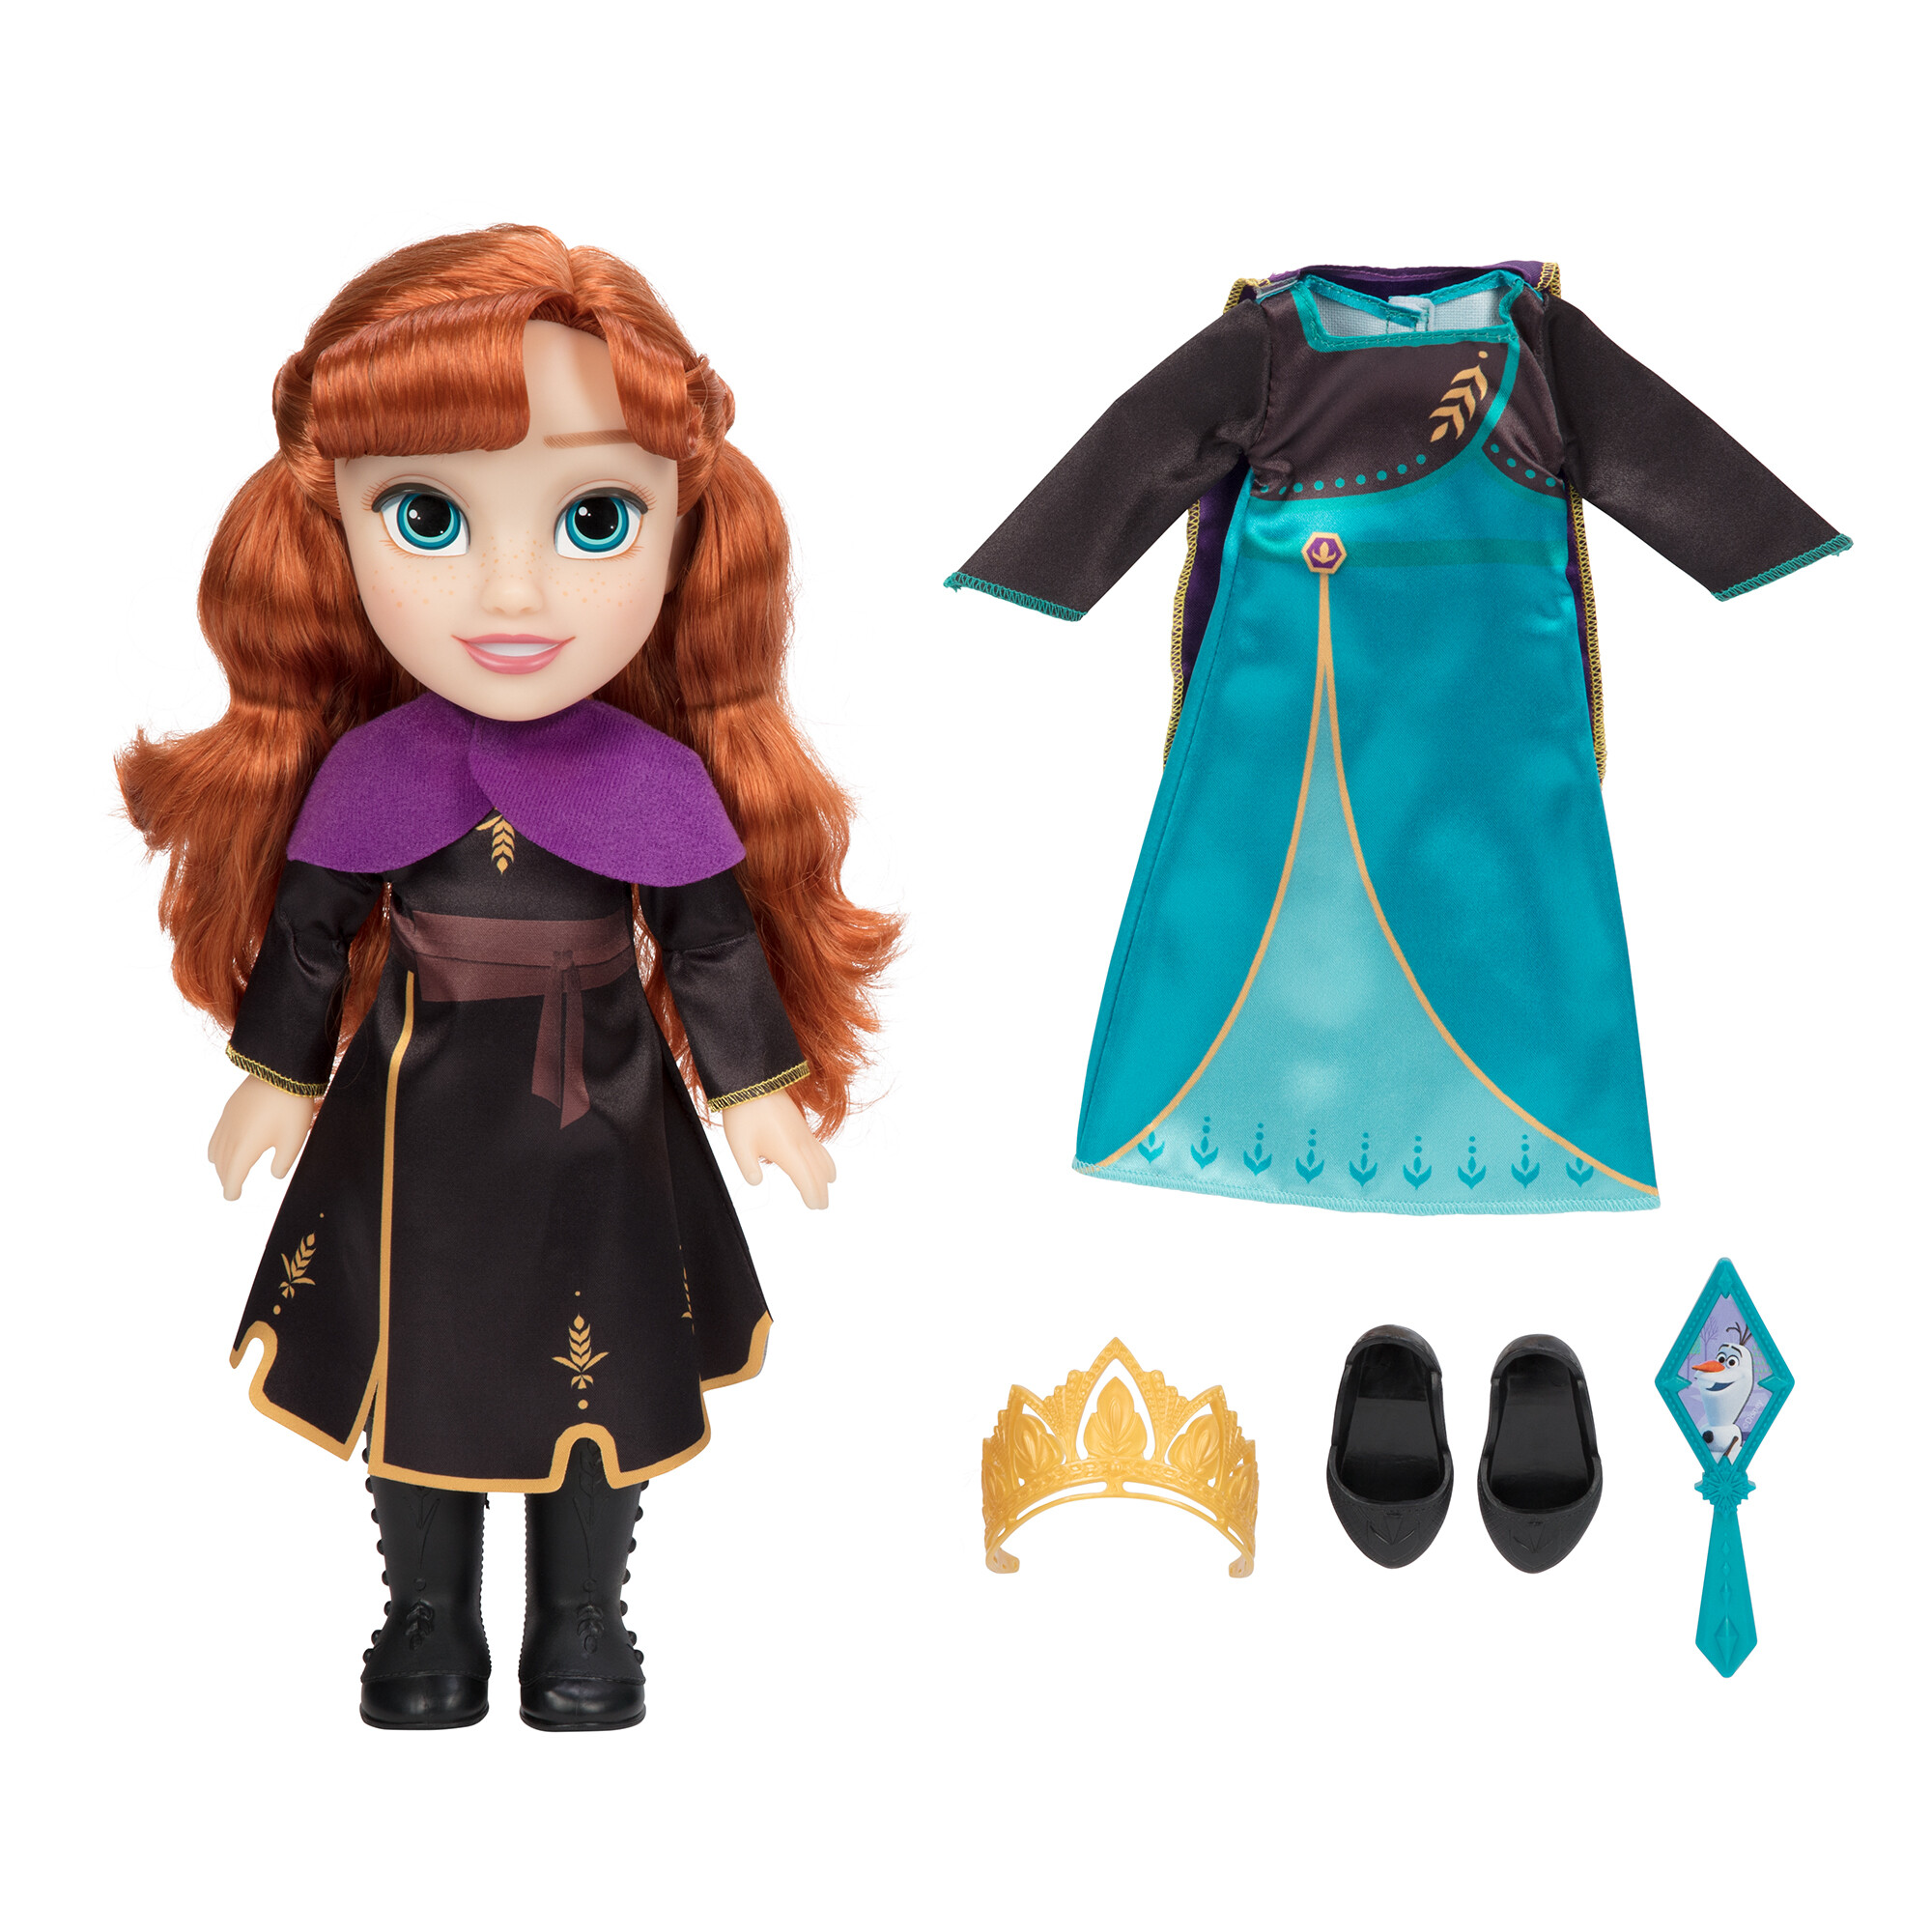 Disney frozen bambola da 38 cm di anna con accessori - DISNEY PRINCESS, Frozen